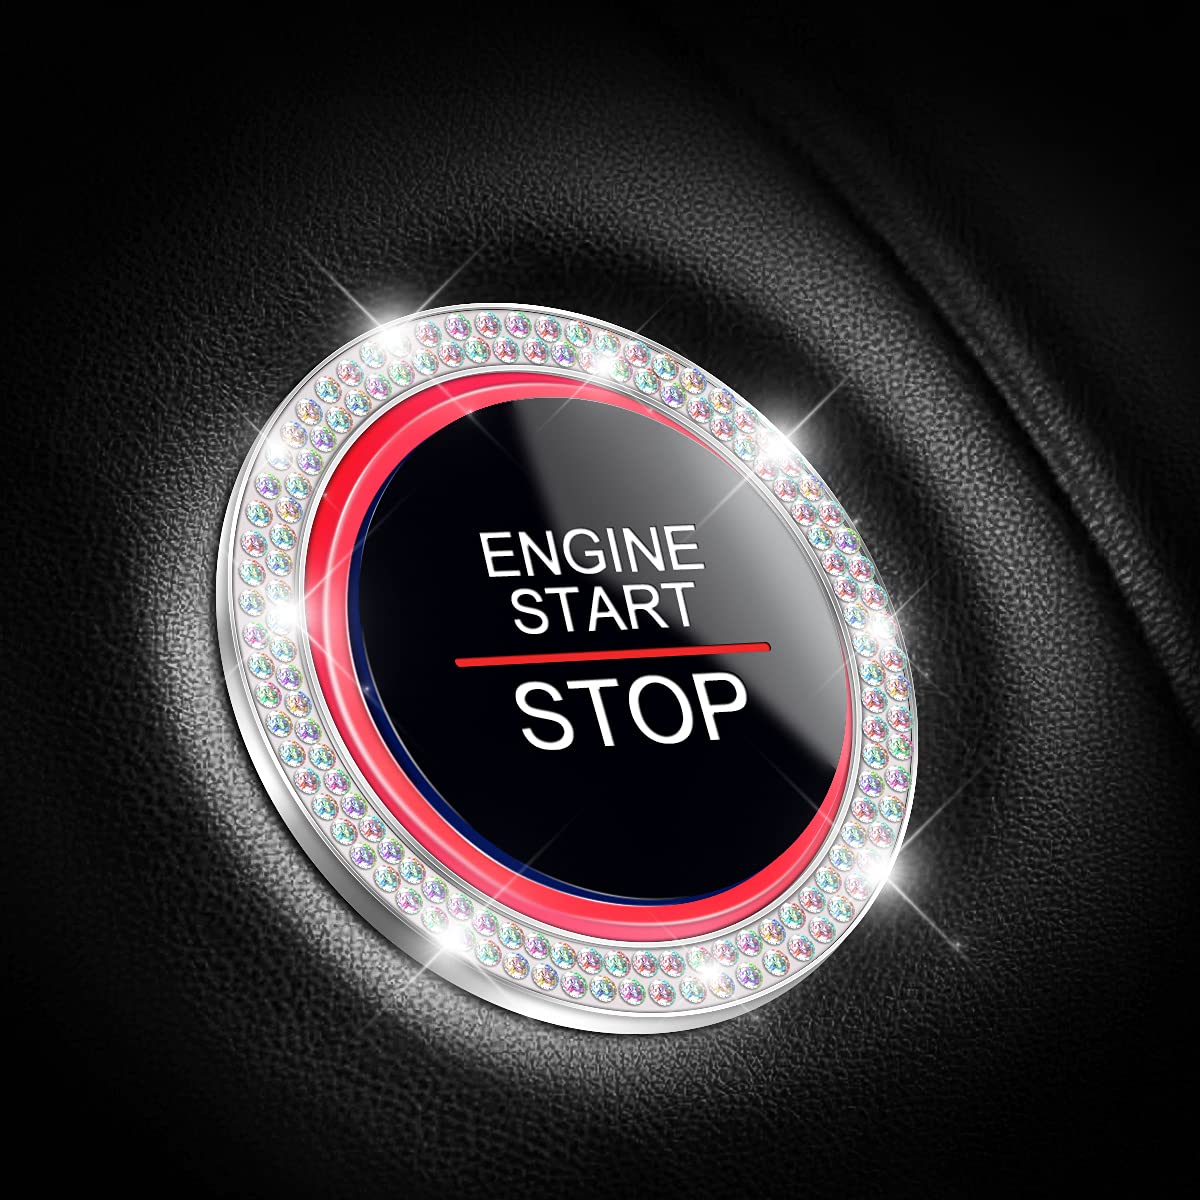 CGEAMDY 2 Stück Auto Motor Start Stop Button Ring, Universal Auto Kristall Strass Motor Starter Dekoration Ring, Auto Startknopf Dekorationsring Autoinnenraum (AB) von CGEAMDY